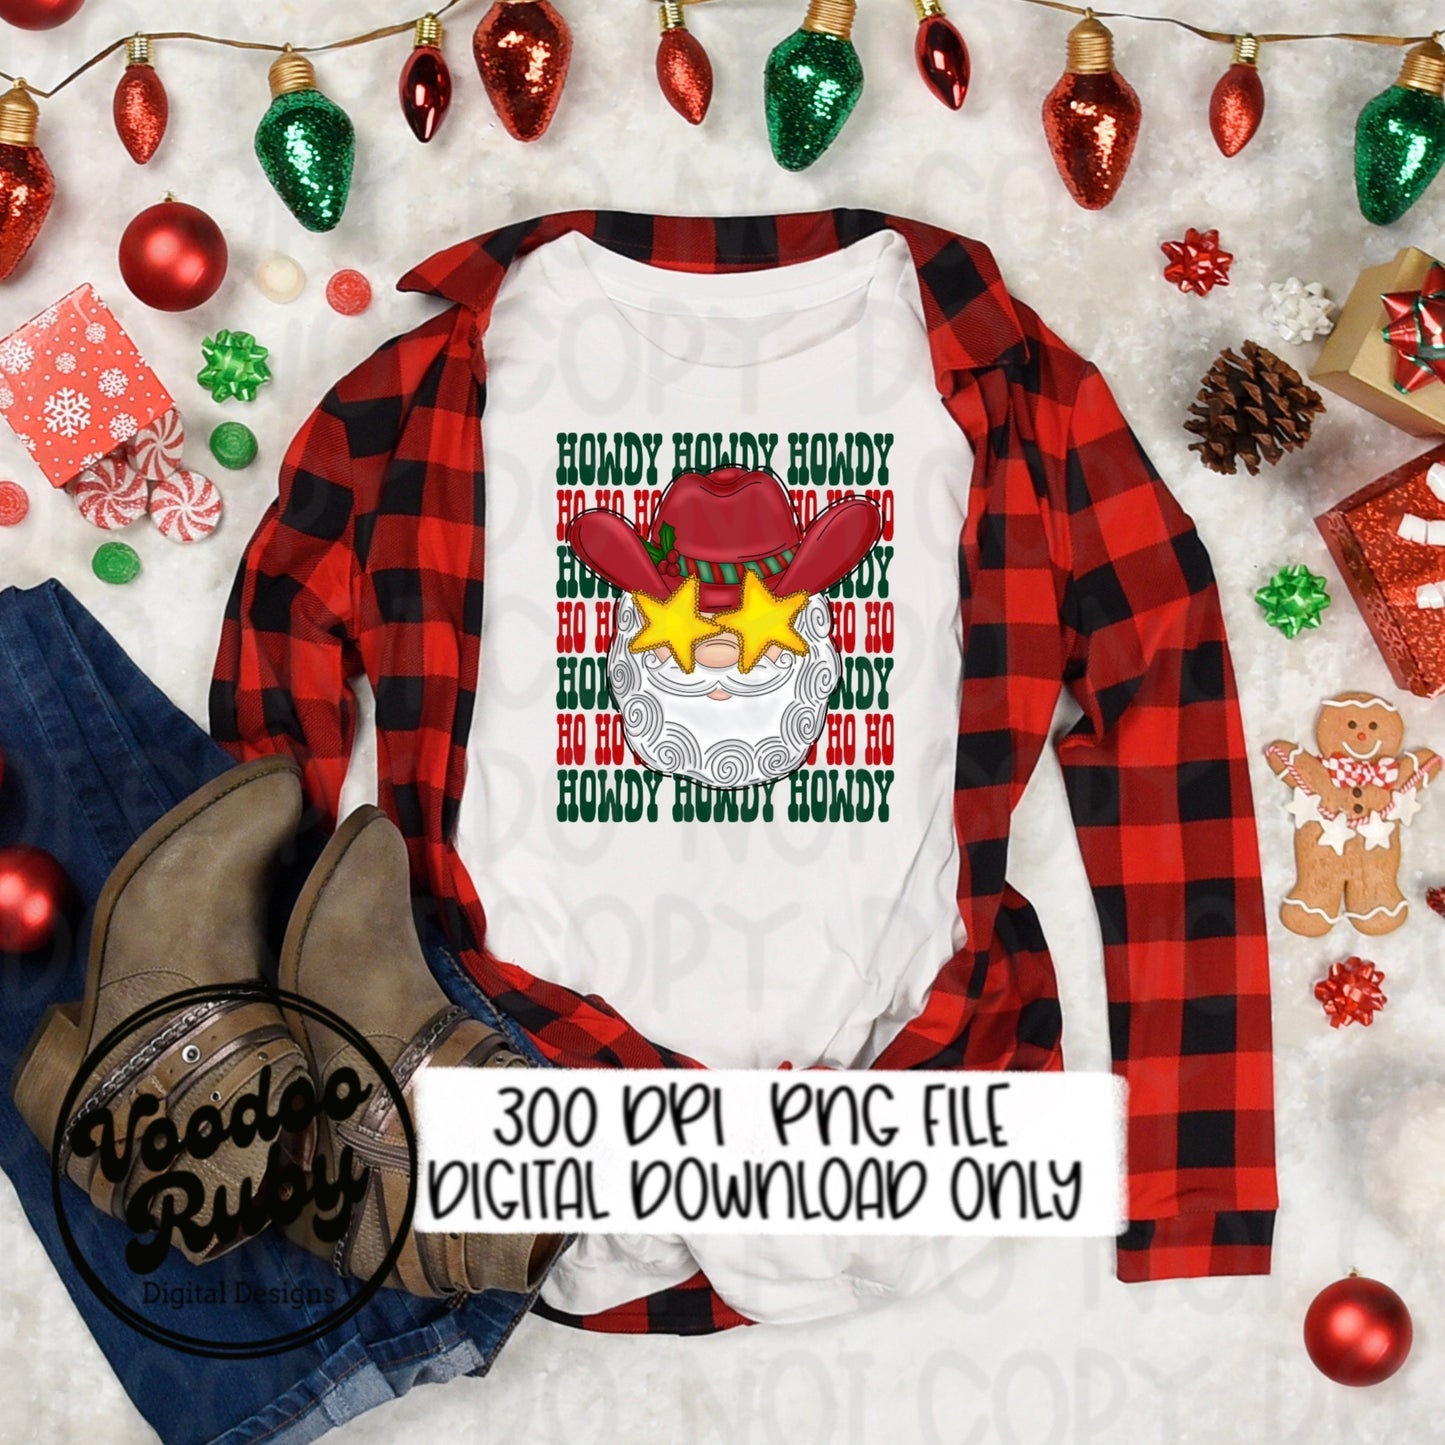 Howdy Santa Sublimation PNG Design Ho Ho Ho Design Hand Drawn Digital Design Download Howdy Ho Ho Ho PNG Cowboy Santa Preppy Christmas PNG